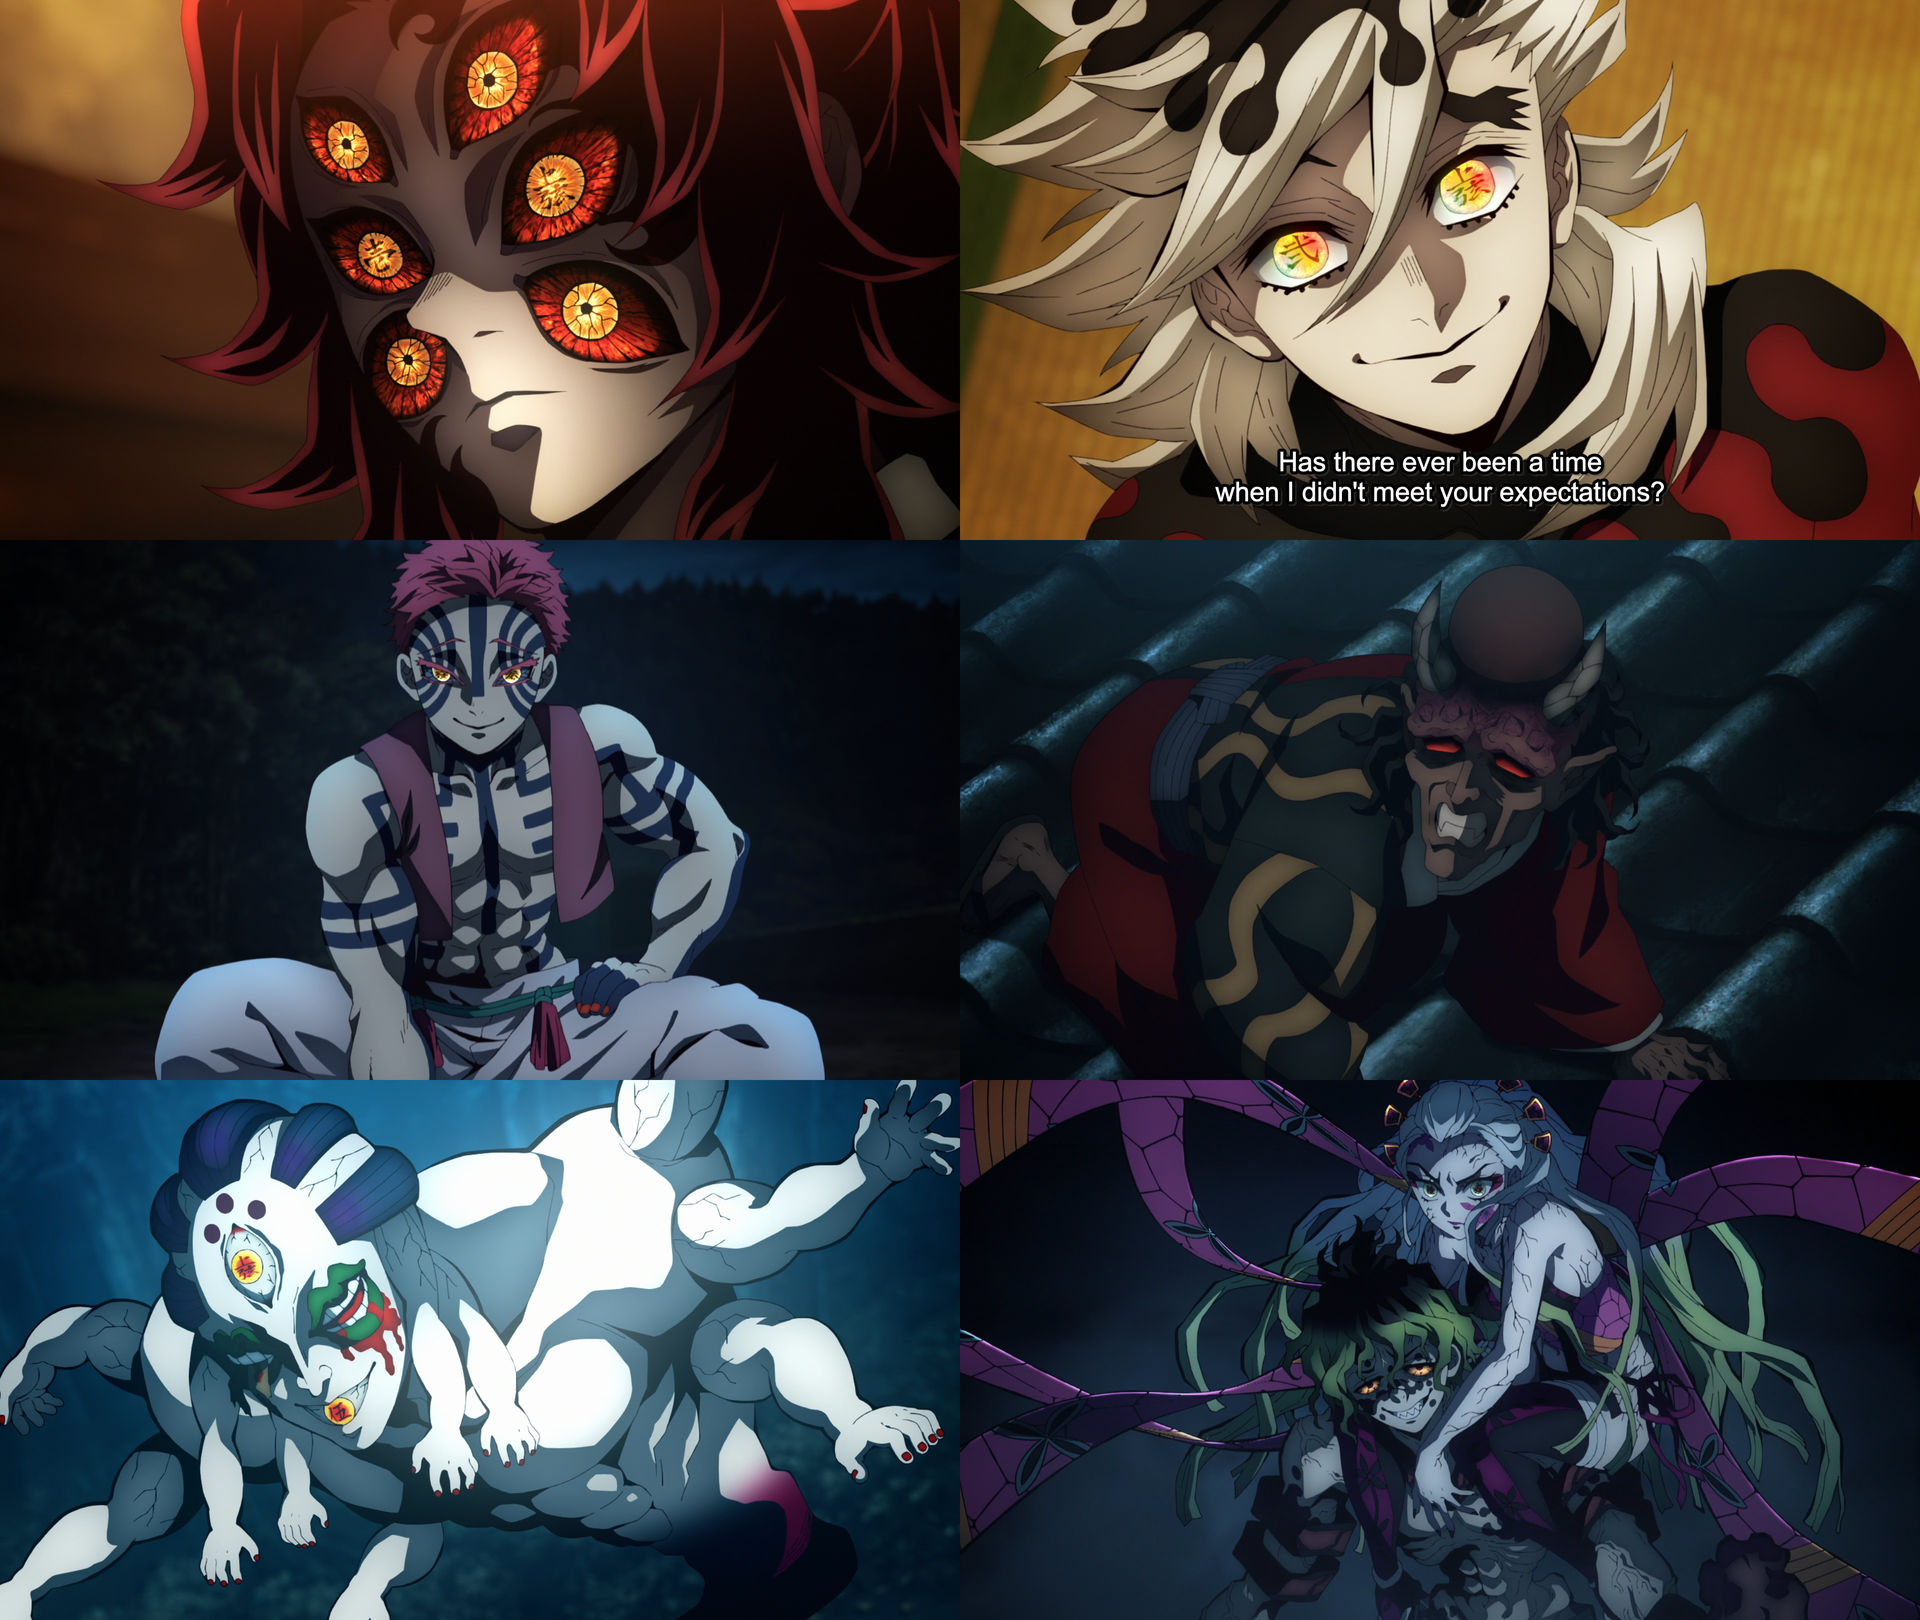 Demon Slayer demons ranked: Who is the strongest of the Twelve Kizuki?